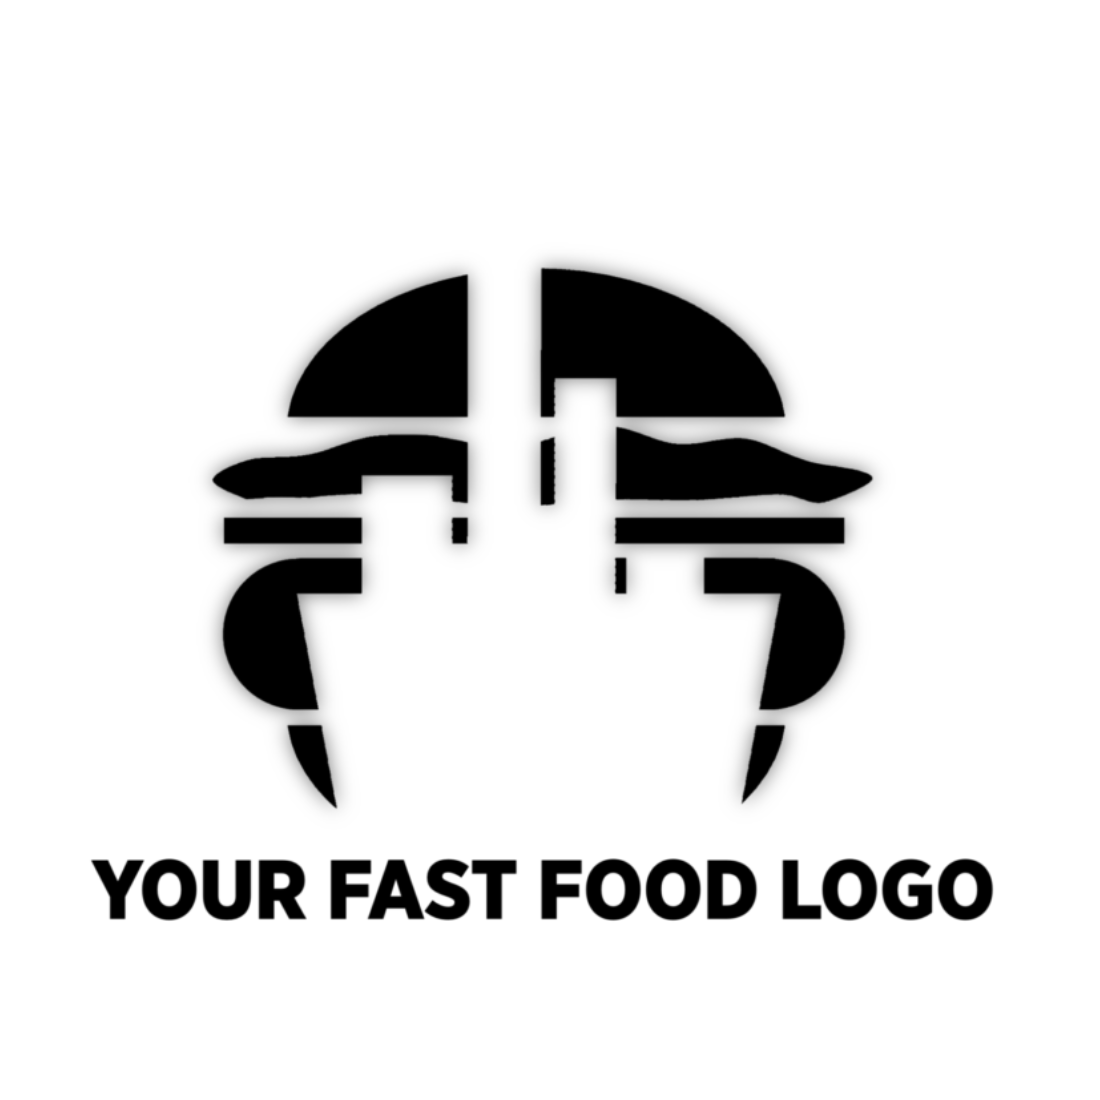 Burger logo preview image.